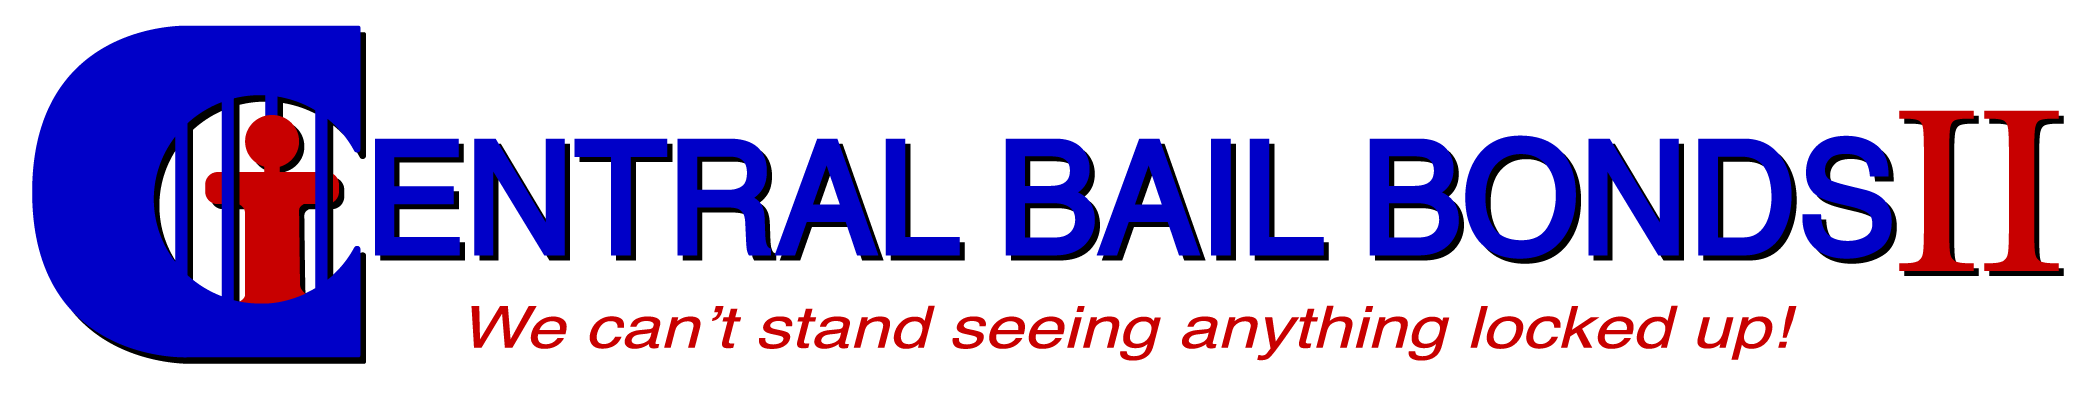 central bail bonds 2 logo image large